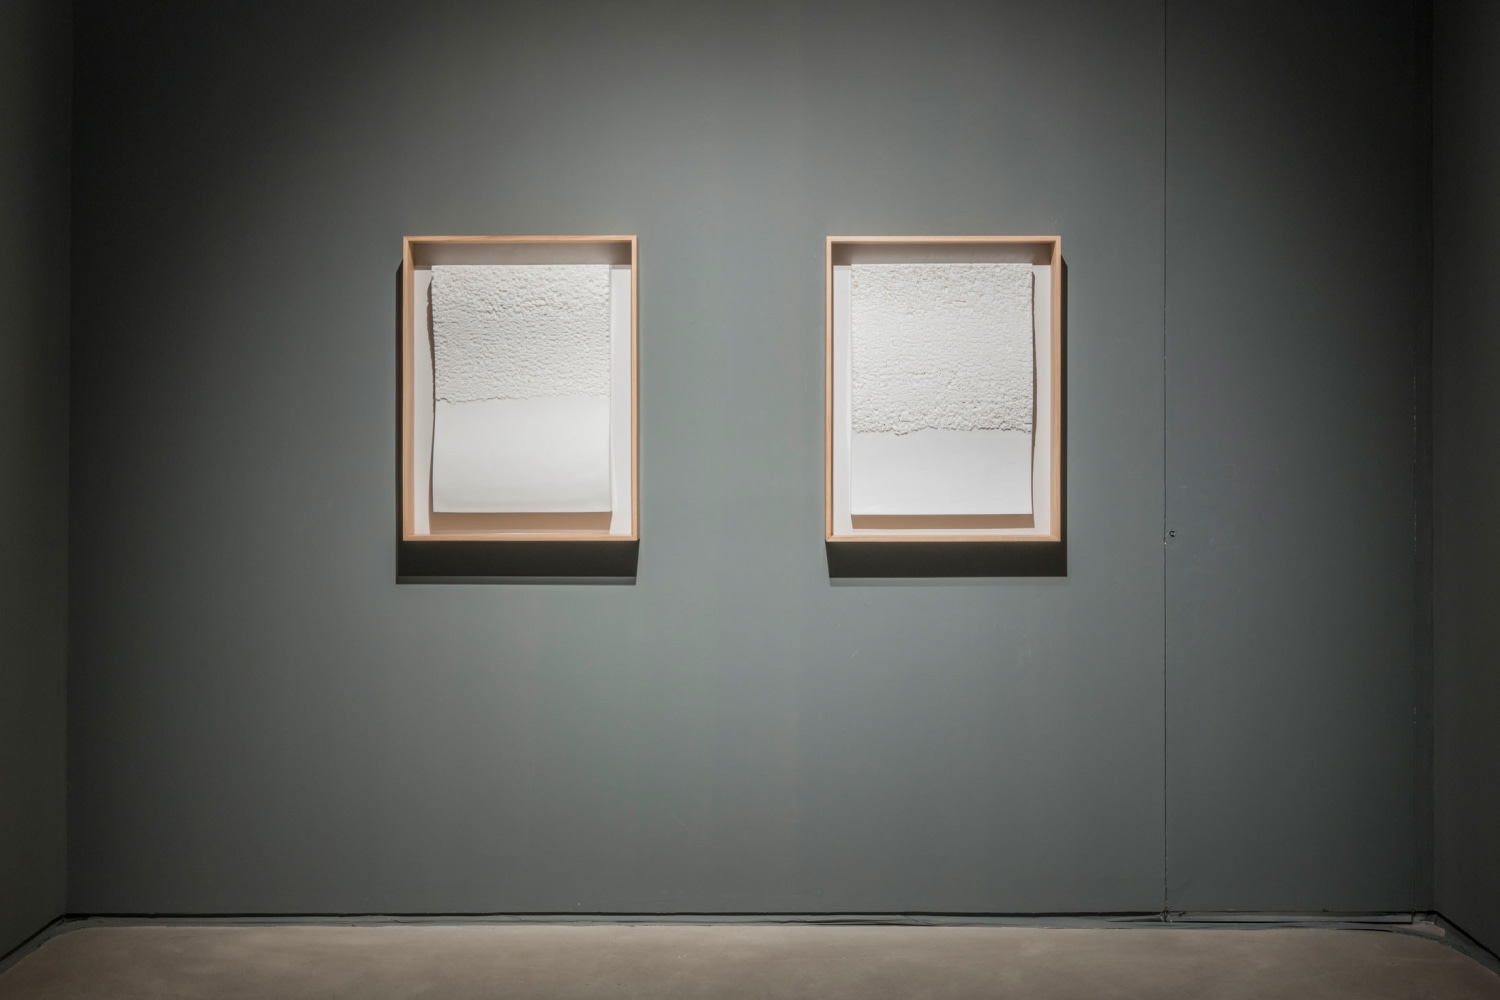 Rosa Barba
Liberties, 2020
Wax, framed
25 5/8 x 33 1/2 inches
(65 x 85 cm)
Installation view at Parra &amp;amp; Romero Gallery, Madrid, 2020
Photo: Roberto Ruiz &amp;copy; Rosa Barba